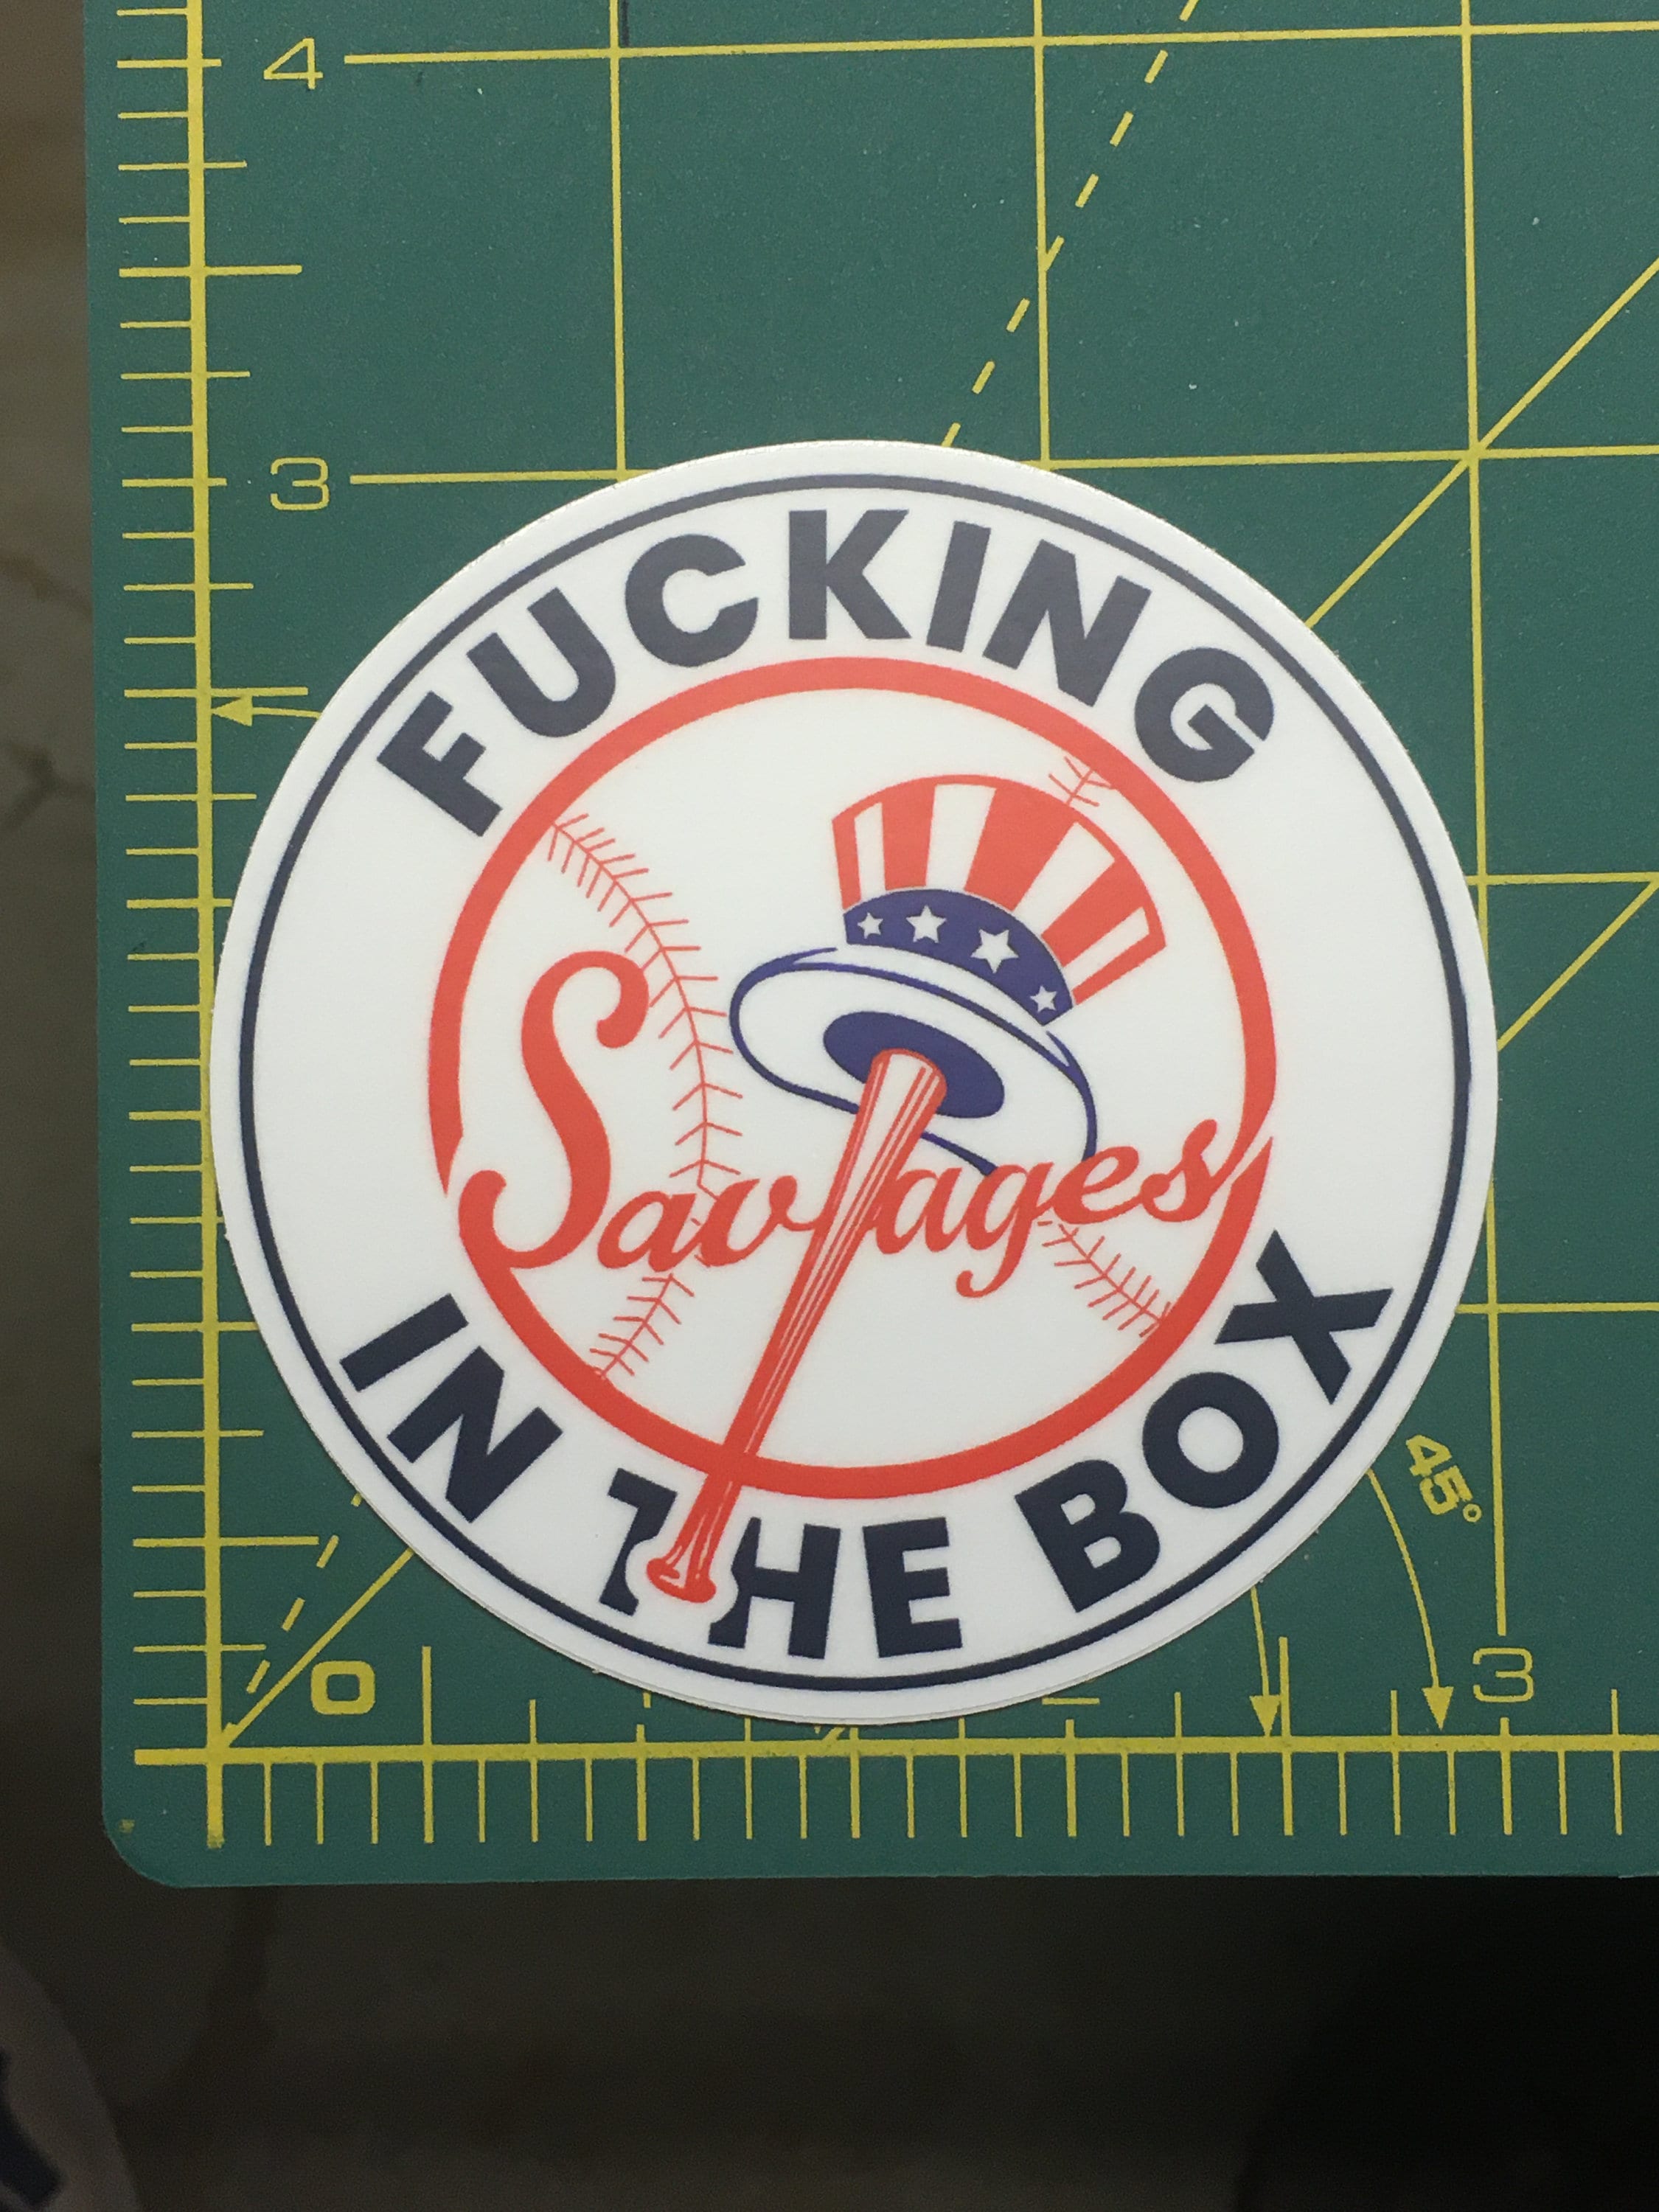 New York Yankees fucking savages in the box logo shirt, hoodie